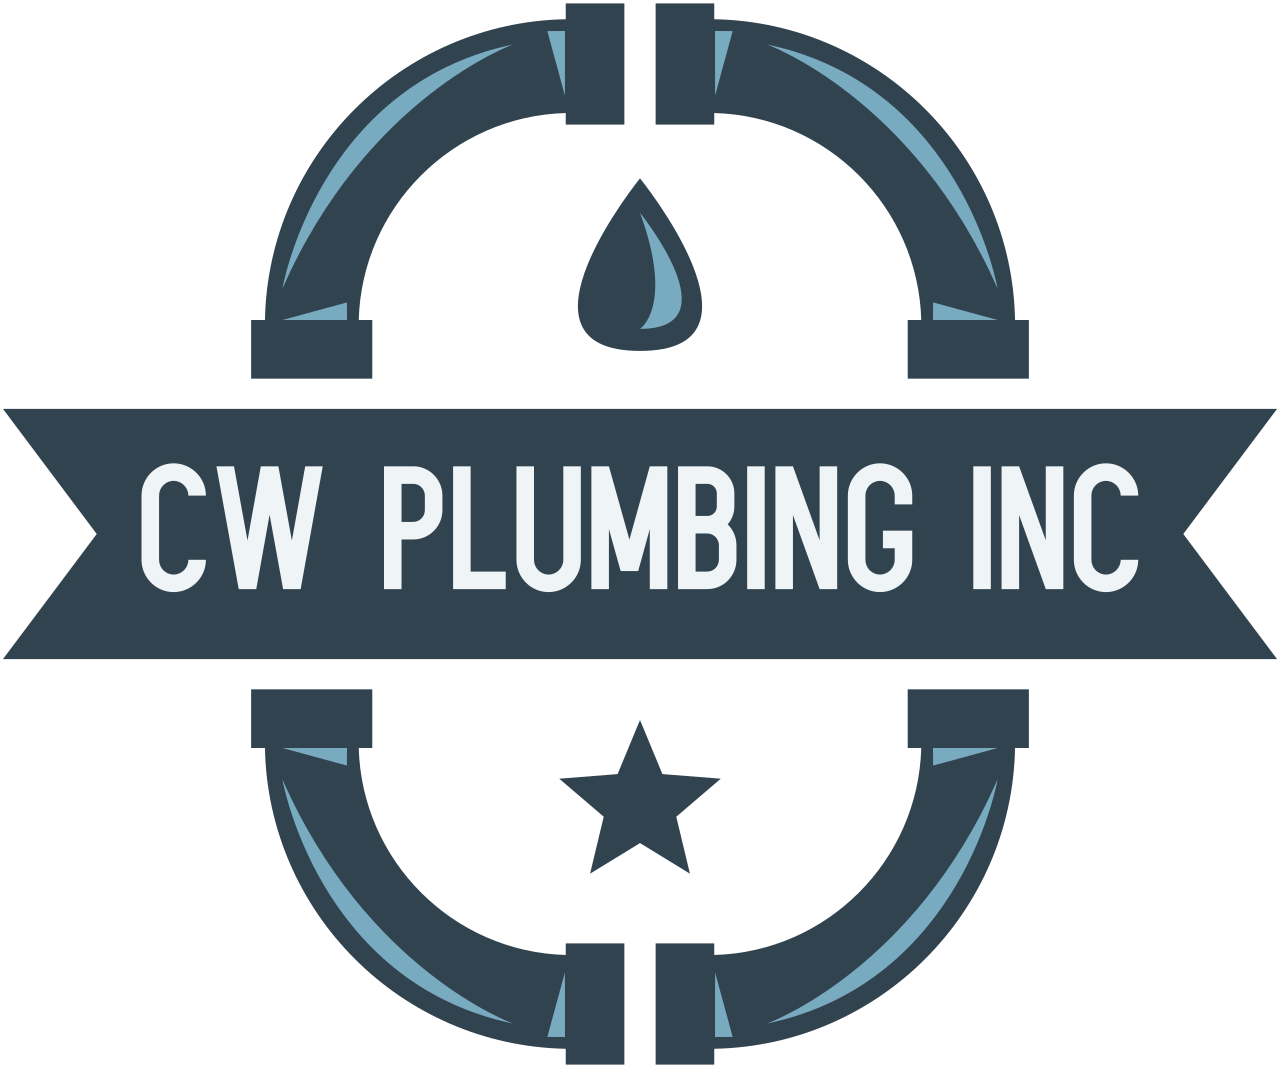 CW Plumbing Inc's web page